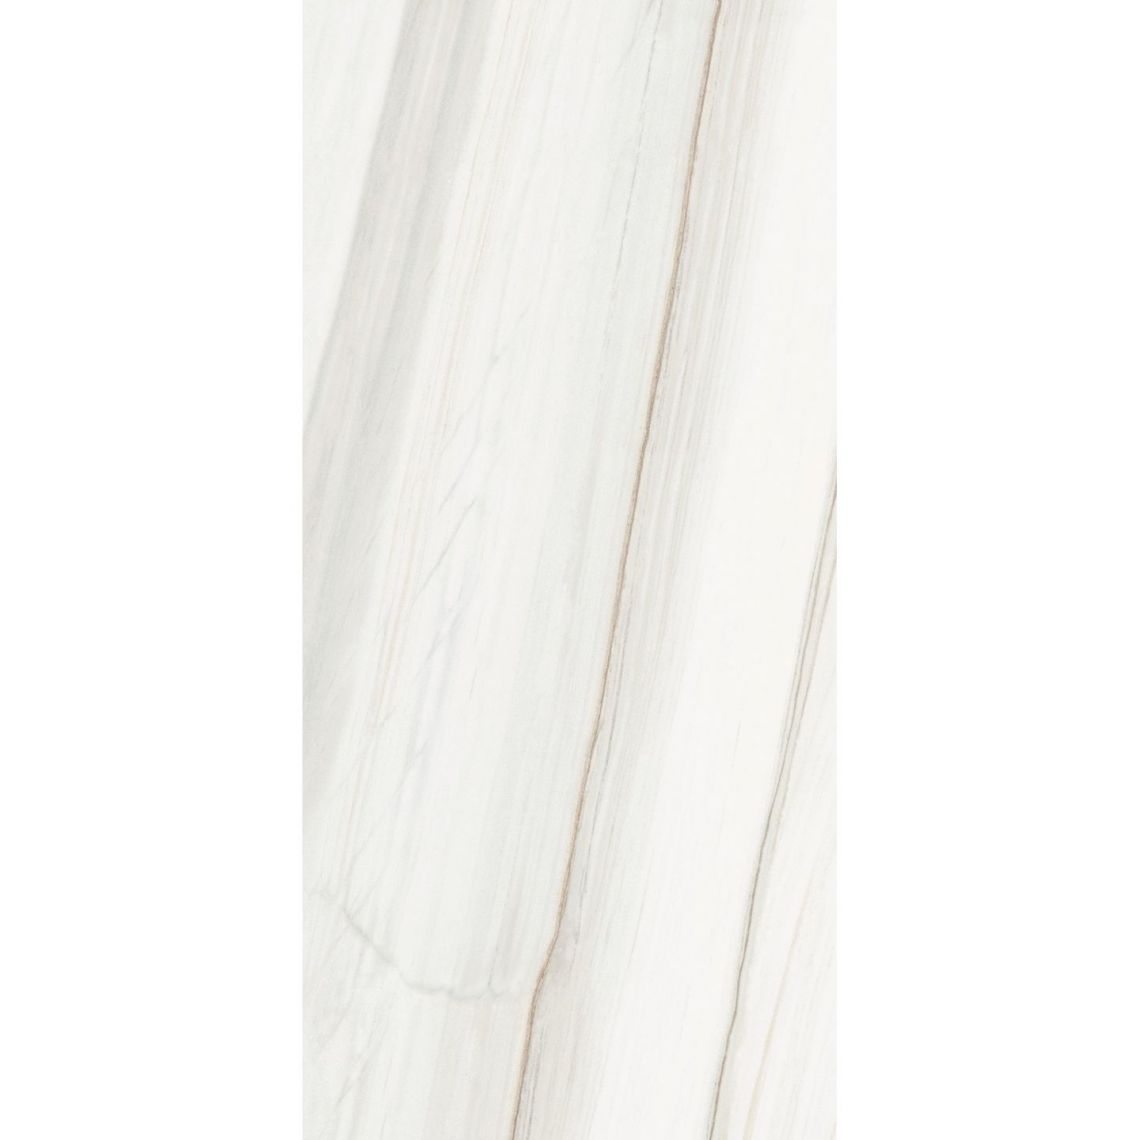 Керамогранитная плита для столешниц SapienStone Bianco Lasa 320х160 natural 12мм (SSH3216508G) - Фото 1